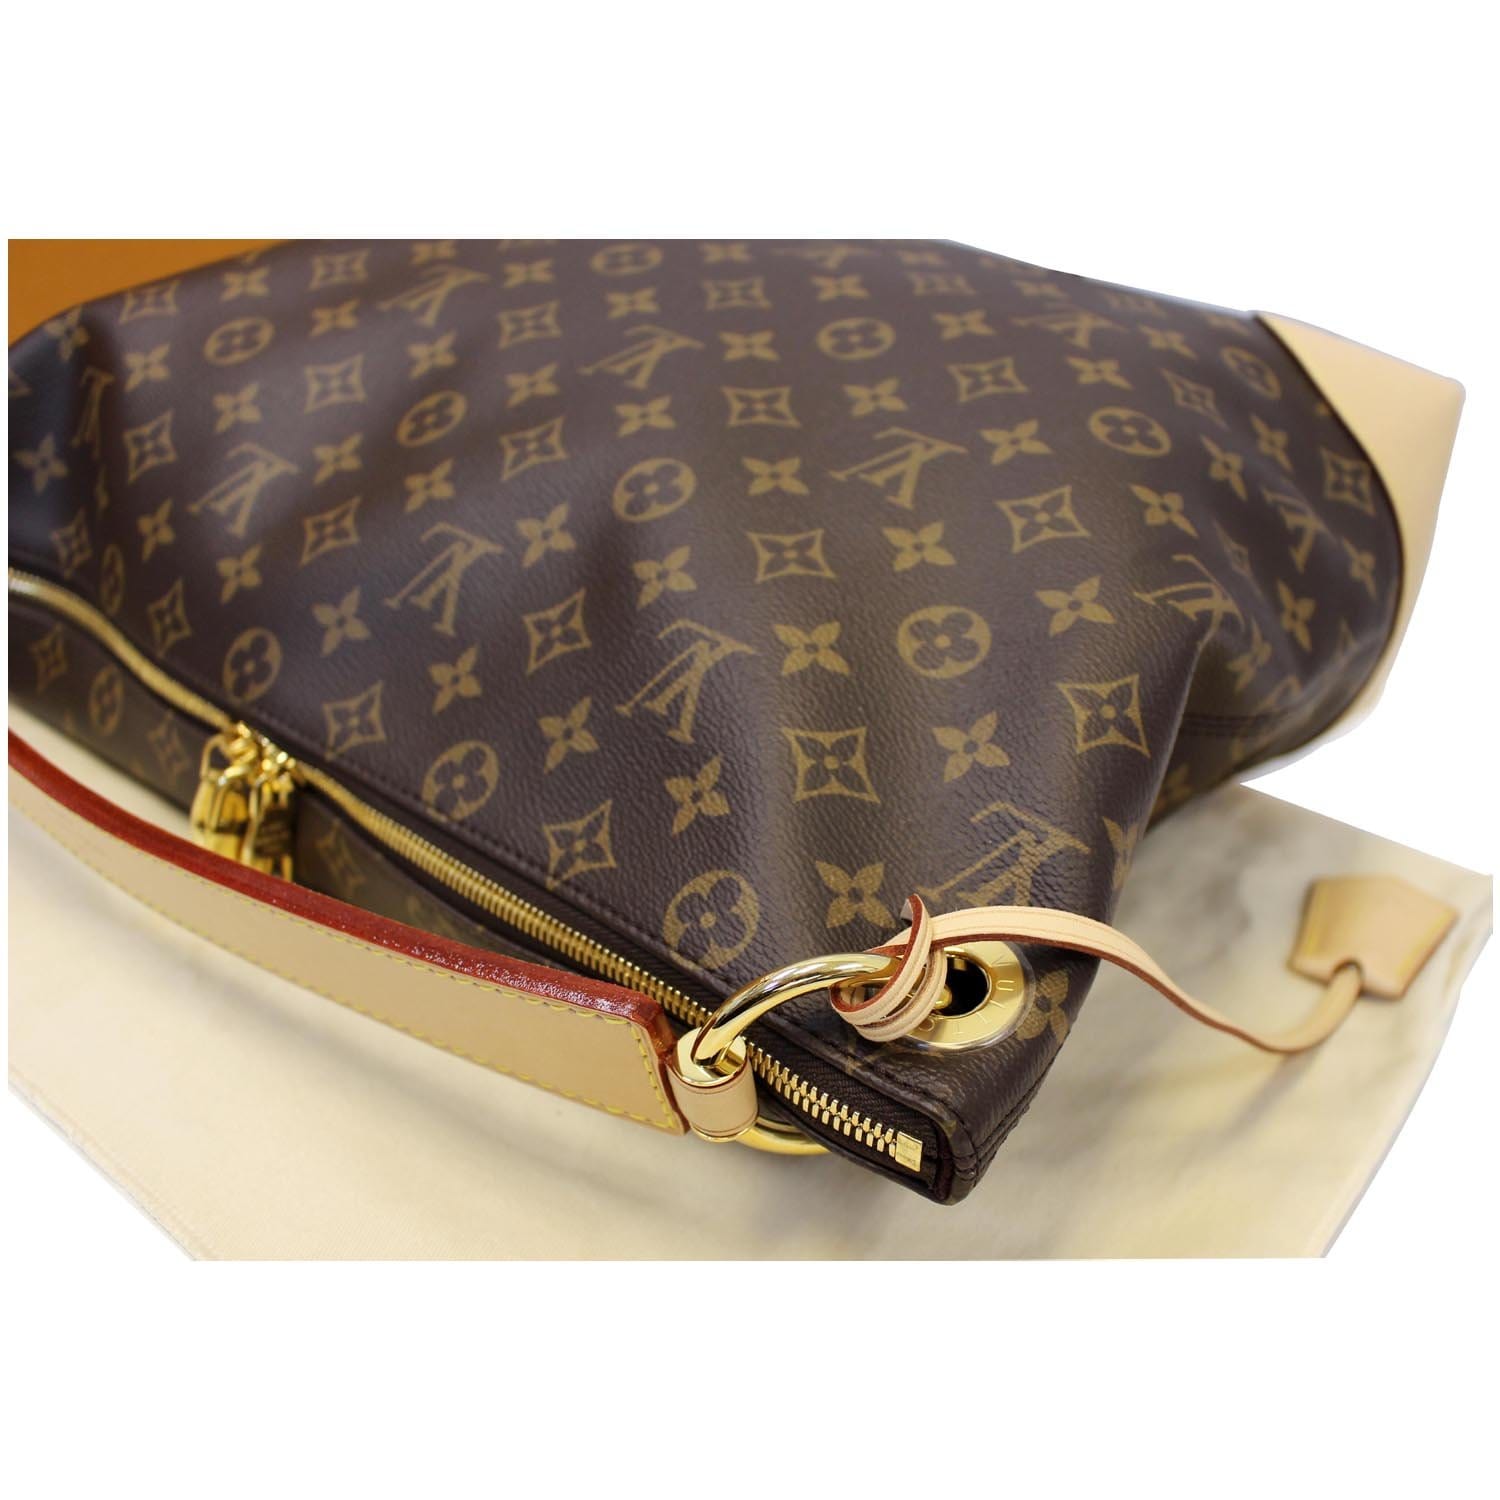 Louis Vuitton Berri MM - Lv Monogram Shoulder Bag